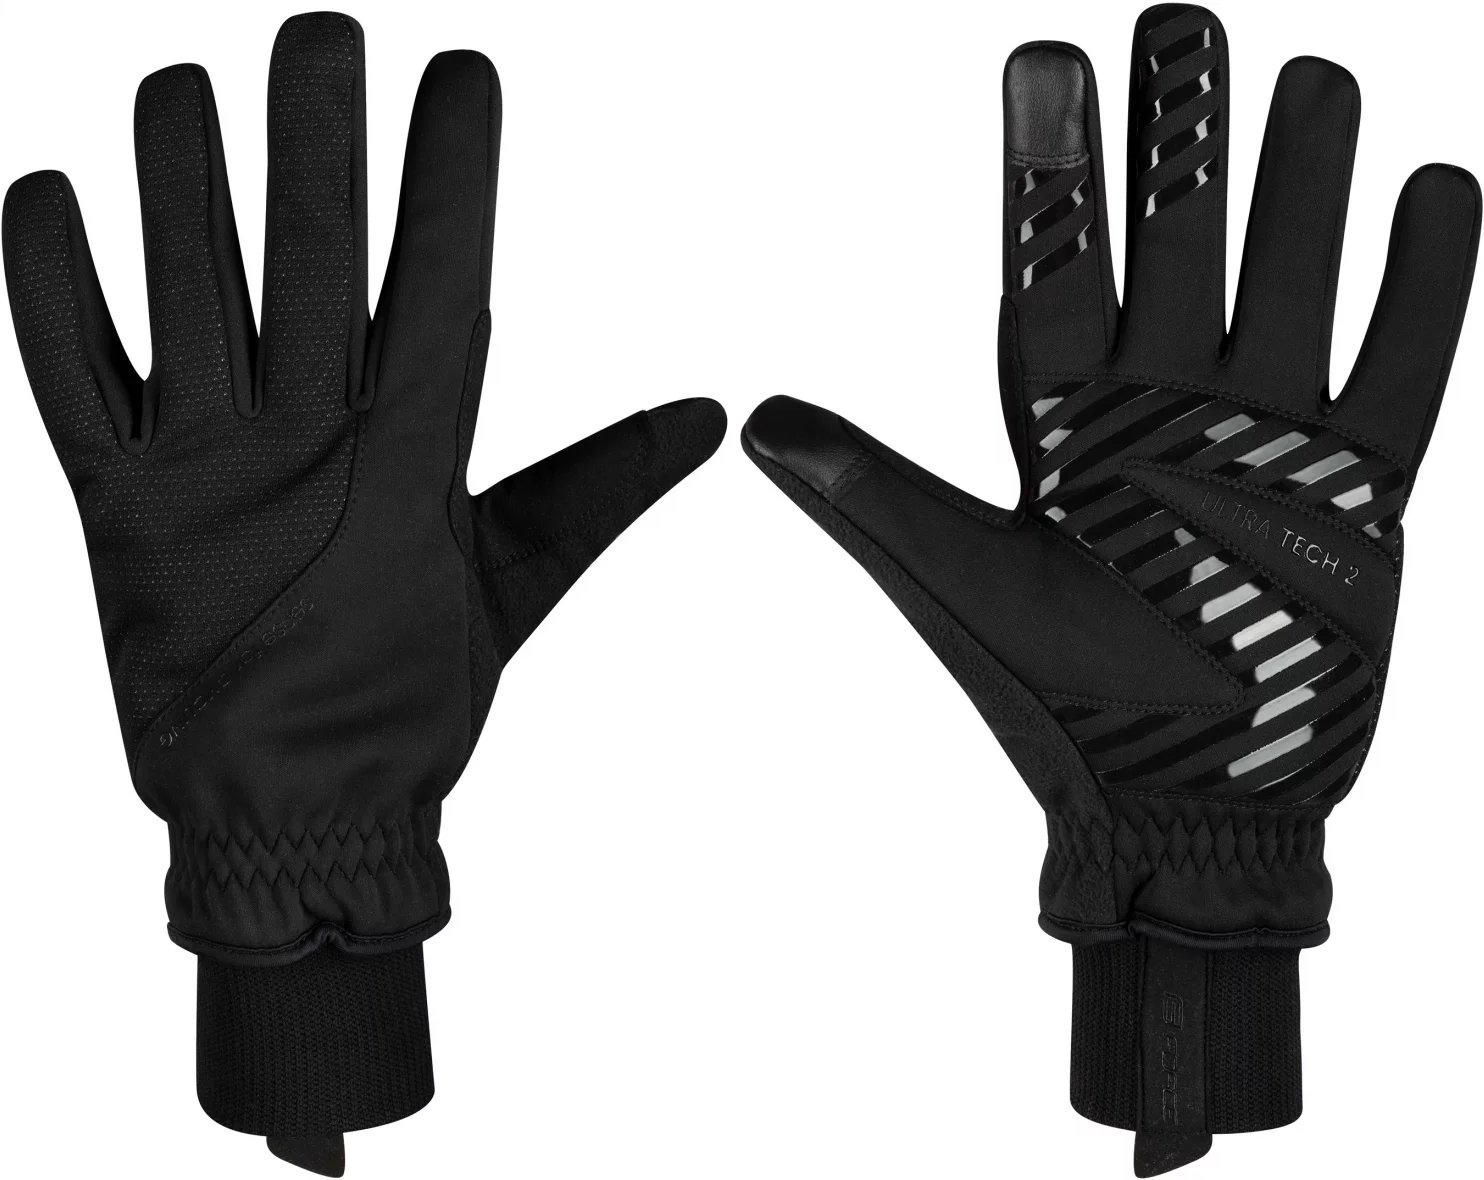 Force Ultra Tech 2 Gloves black L